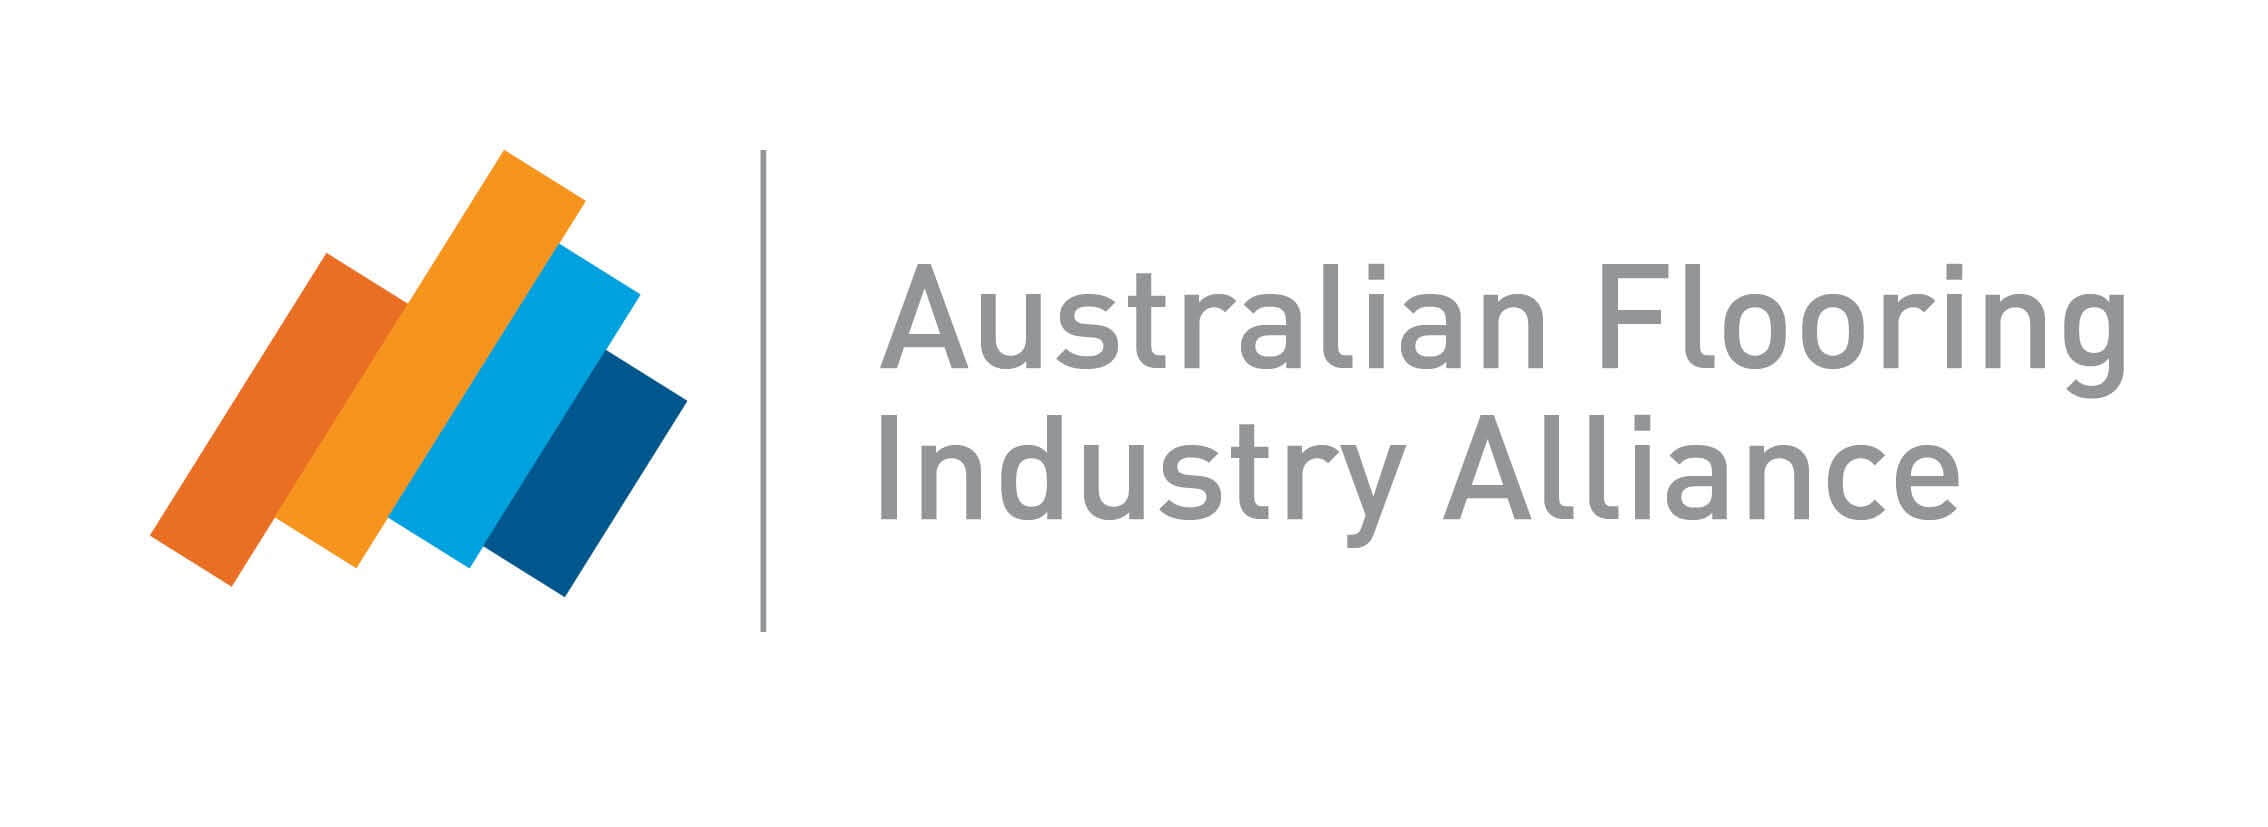 Who is Australian Flooring Industry Alliance?